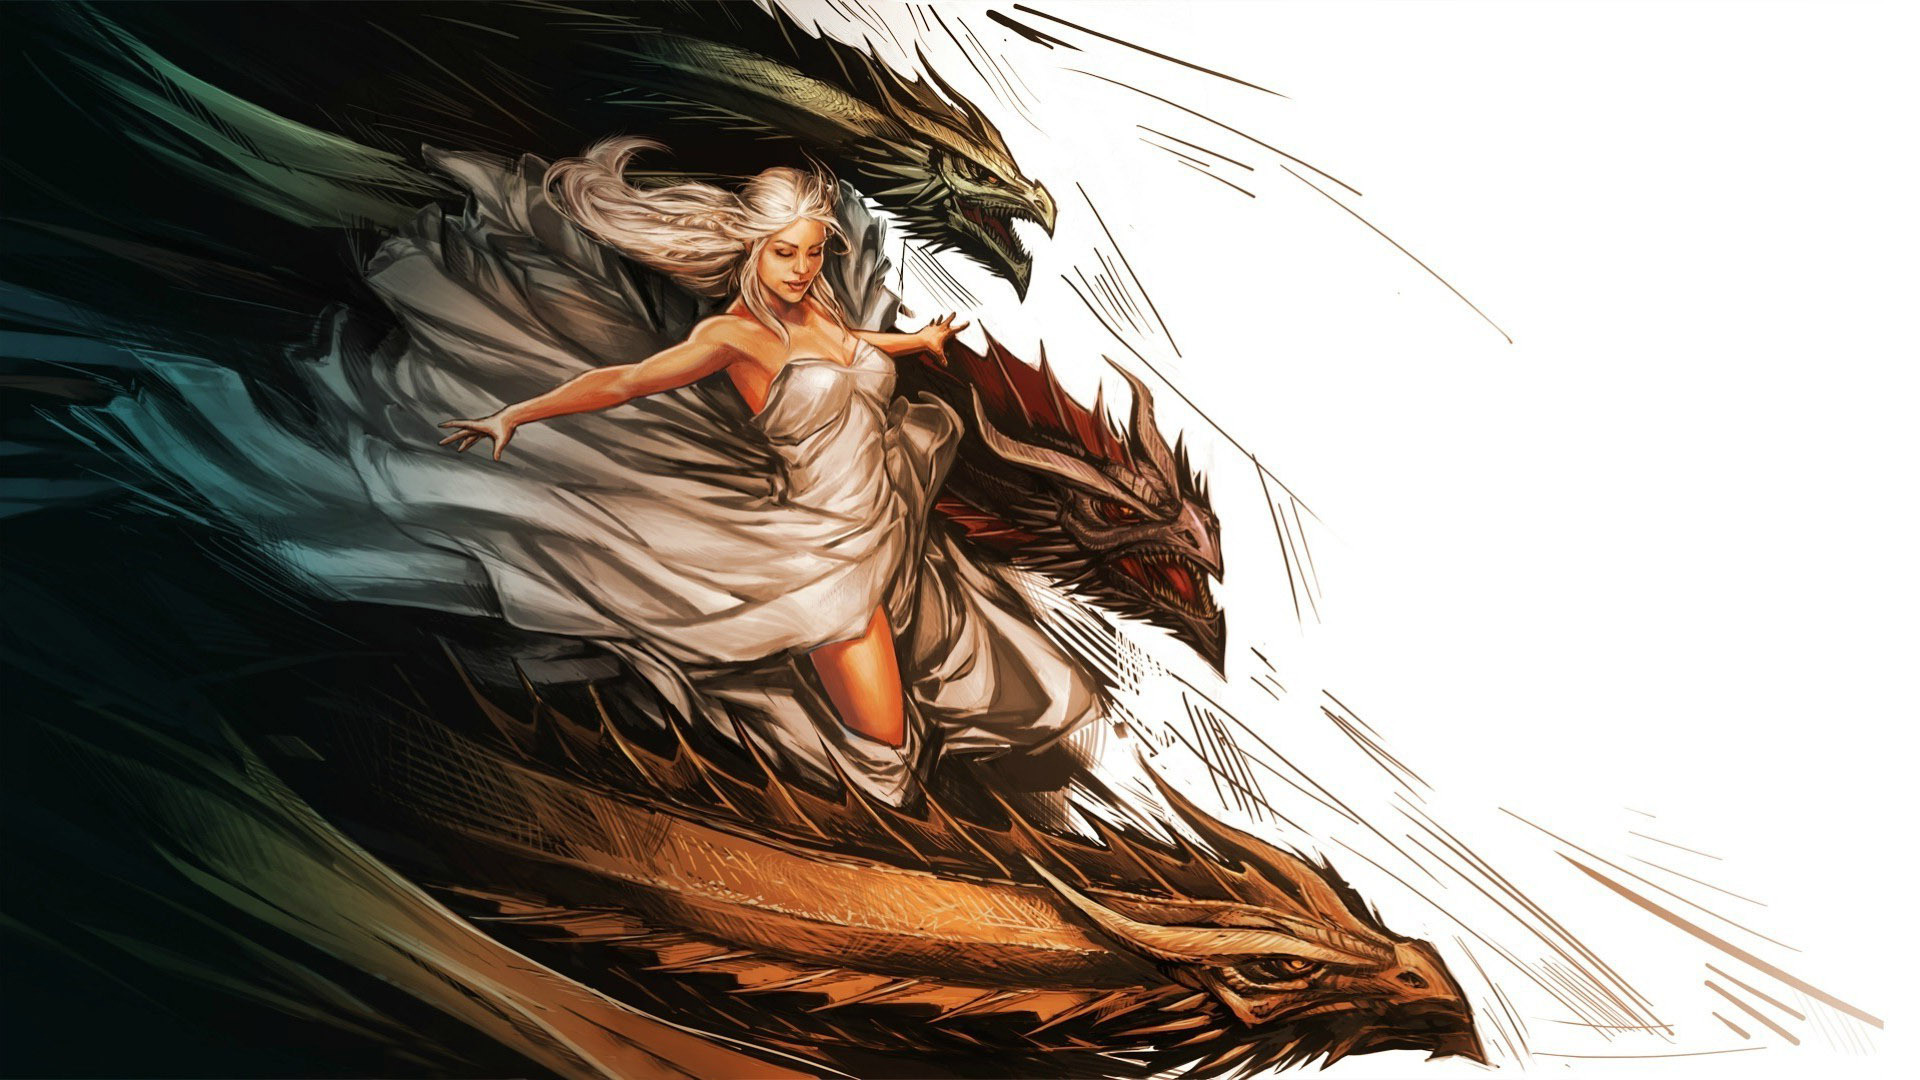 dragones wallpaper hd,cg artwork,illustration,mythology,art,fictional character